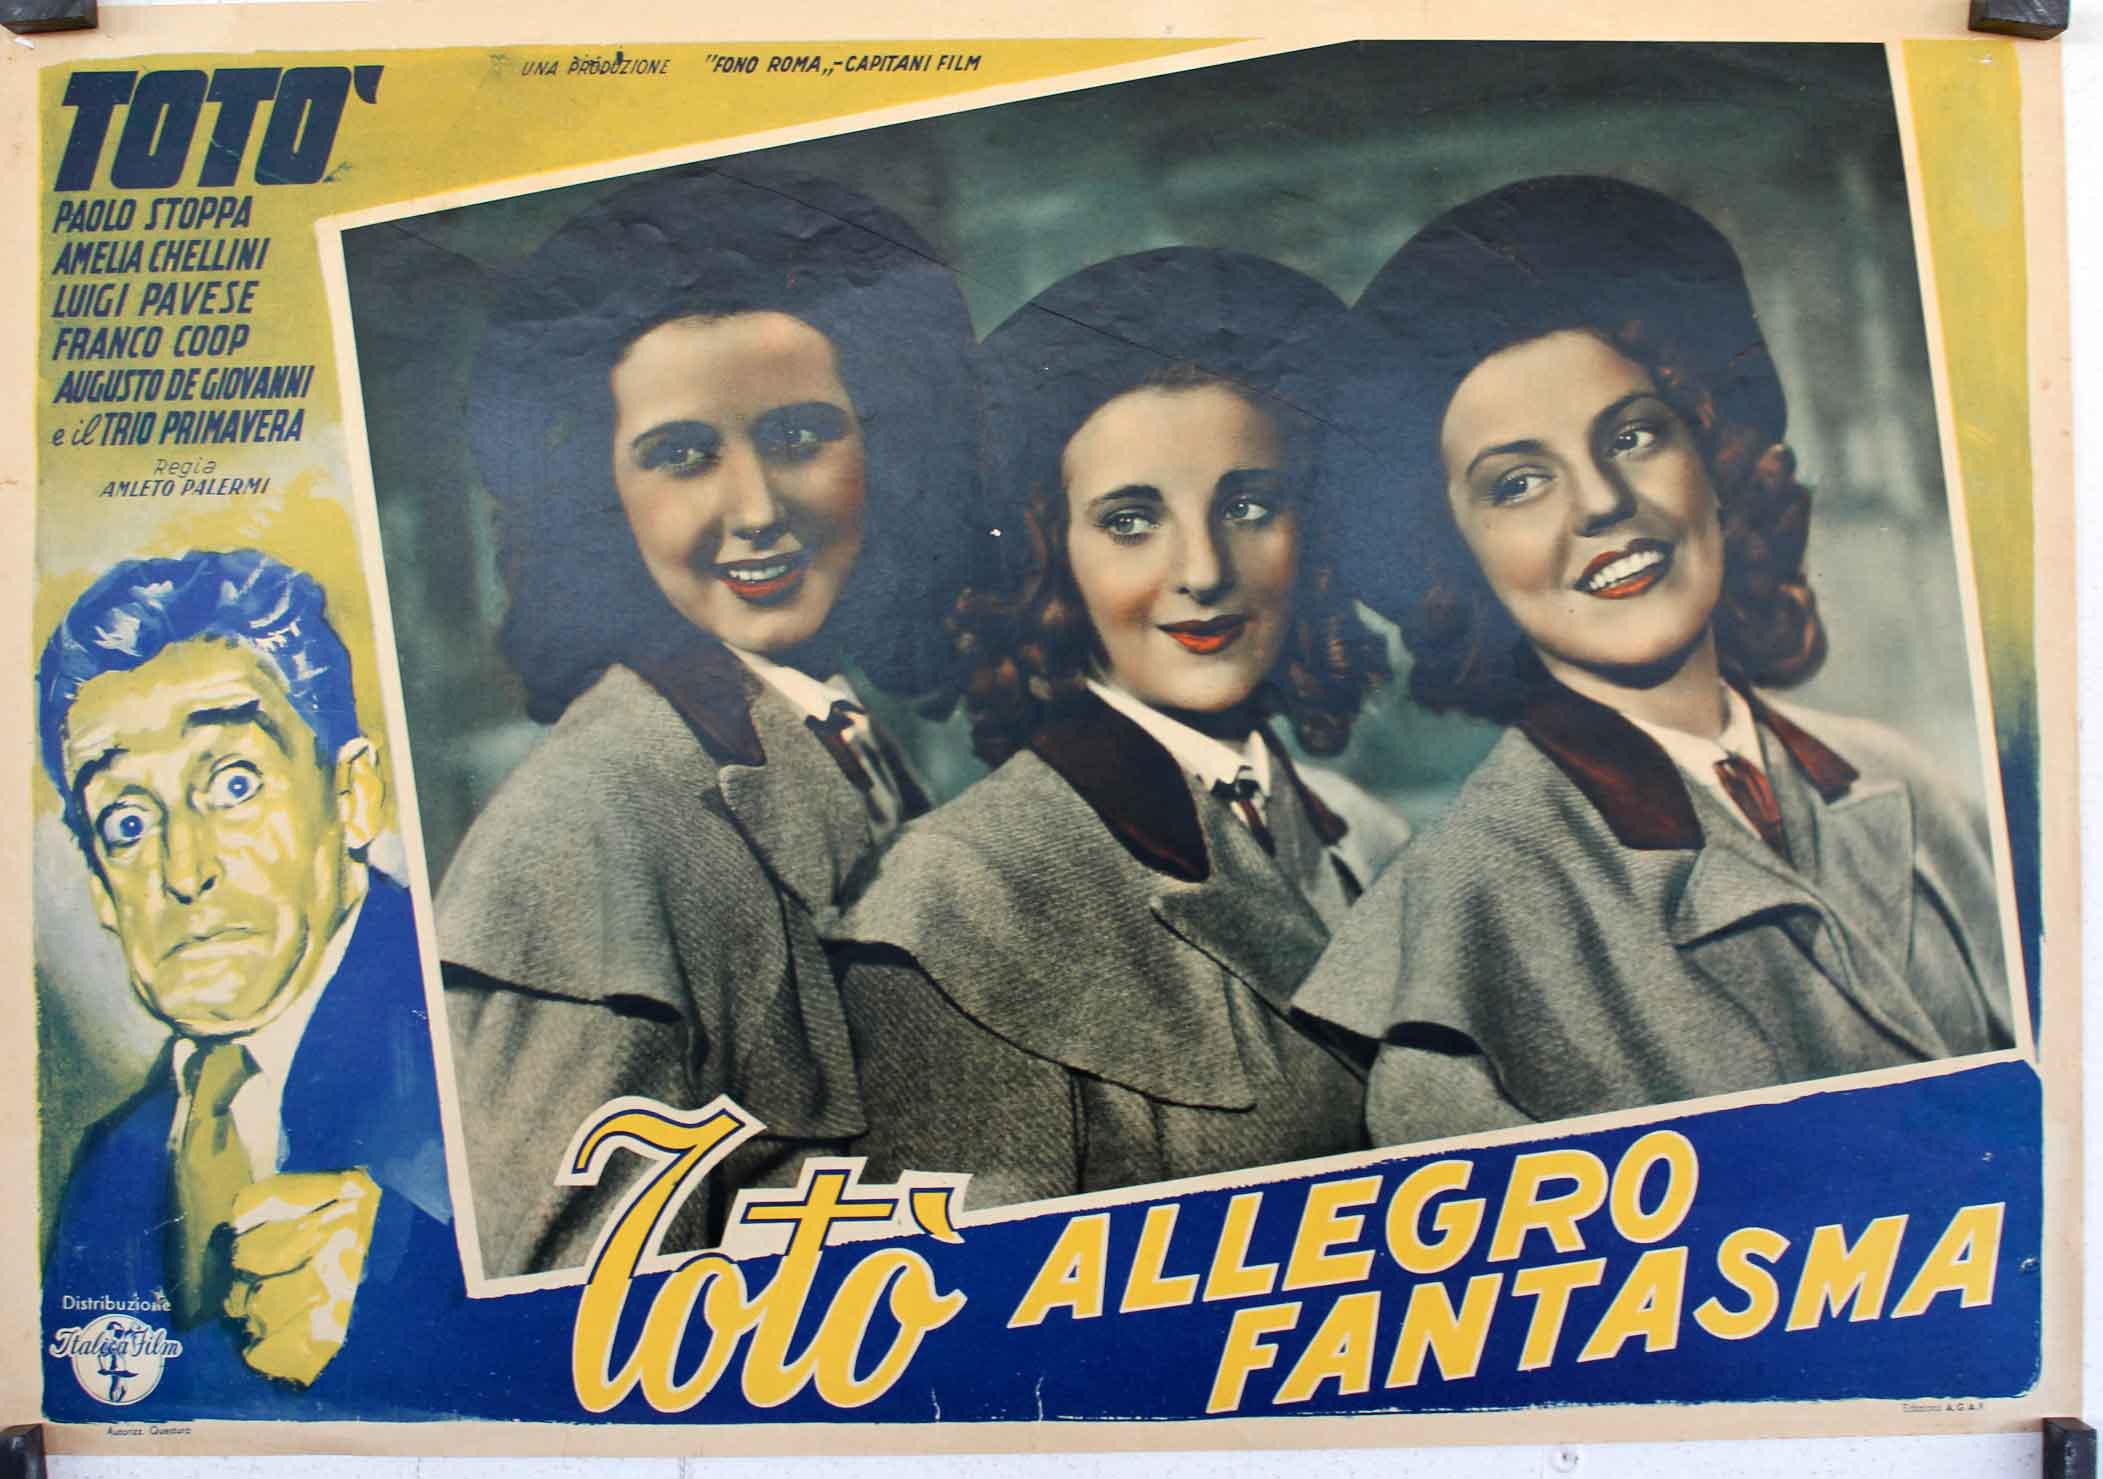 L'allegro fantasma (1941) Screenshot 1 